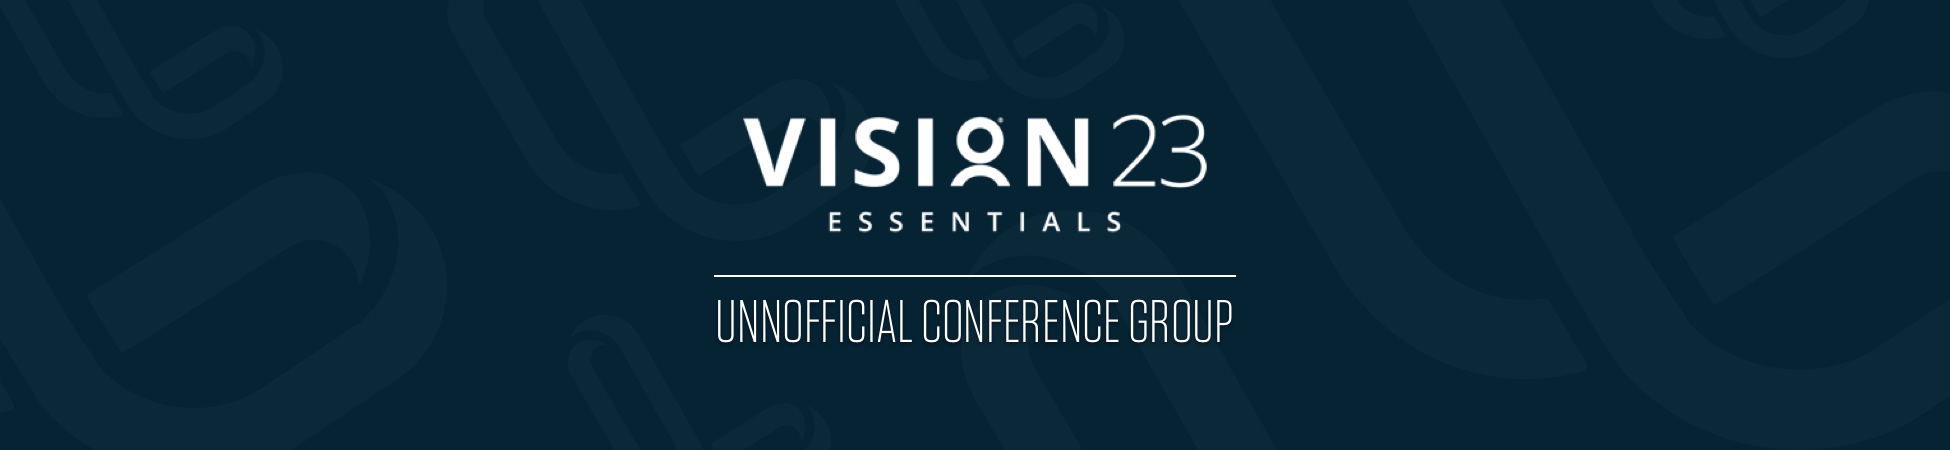 Vision23